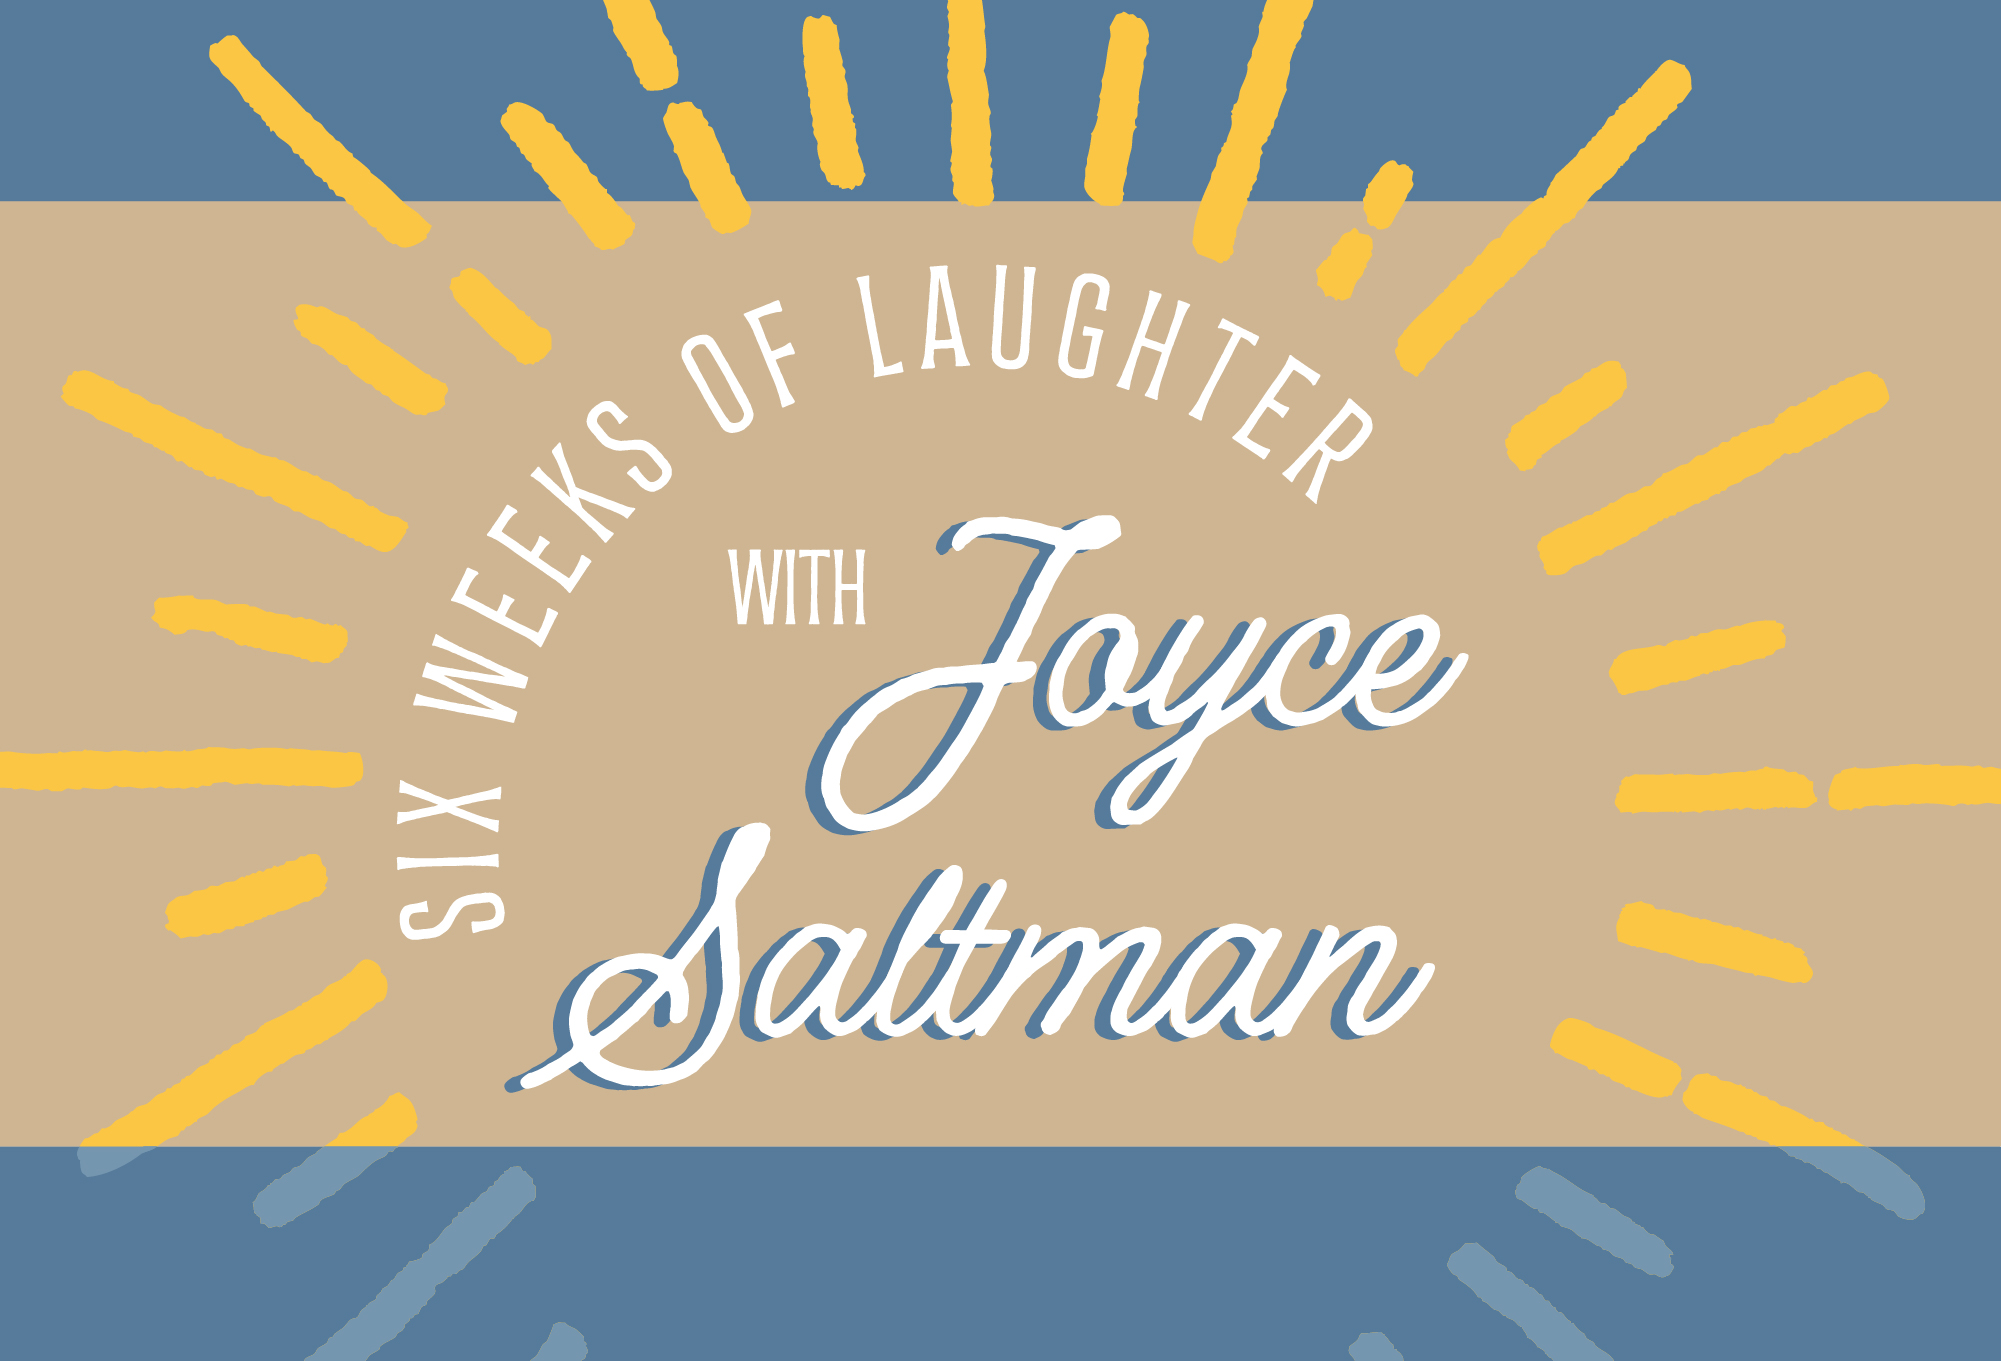 Wednesdays Six Weeks of Laughter with Joyce Saltman